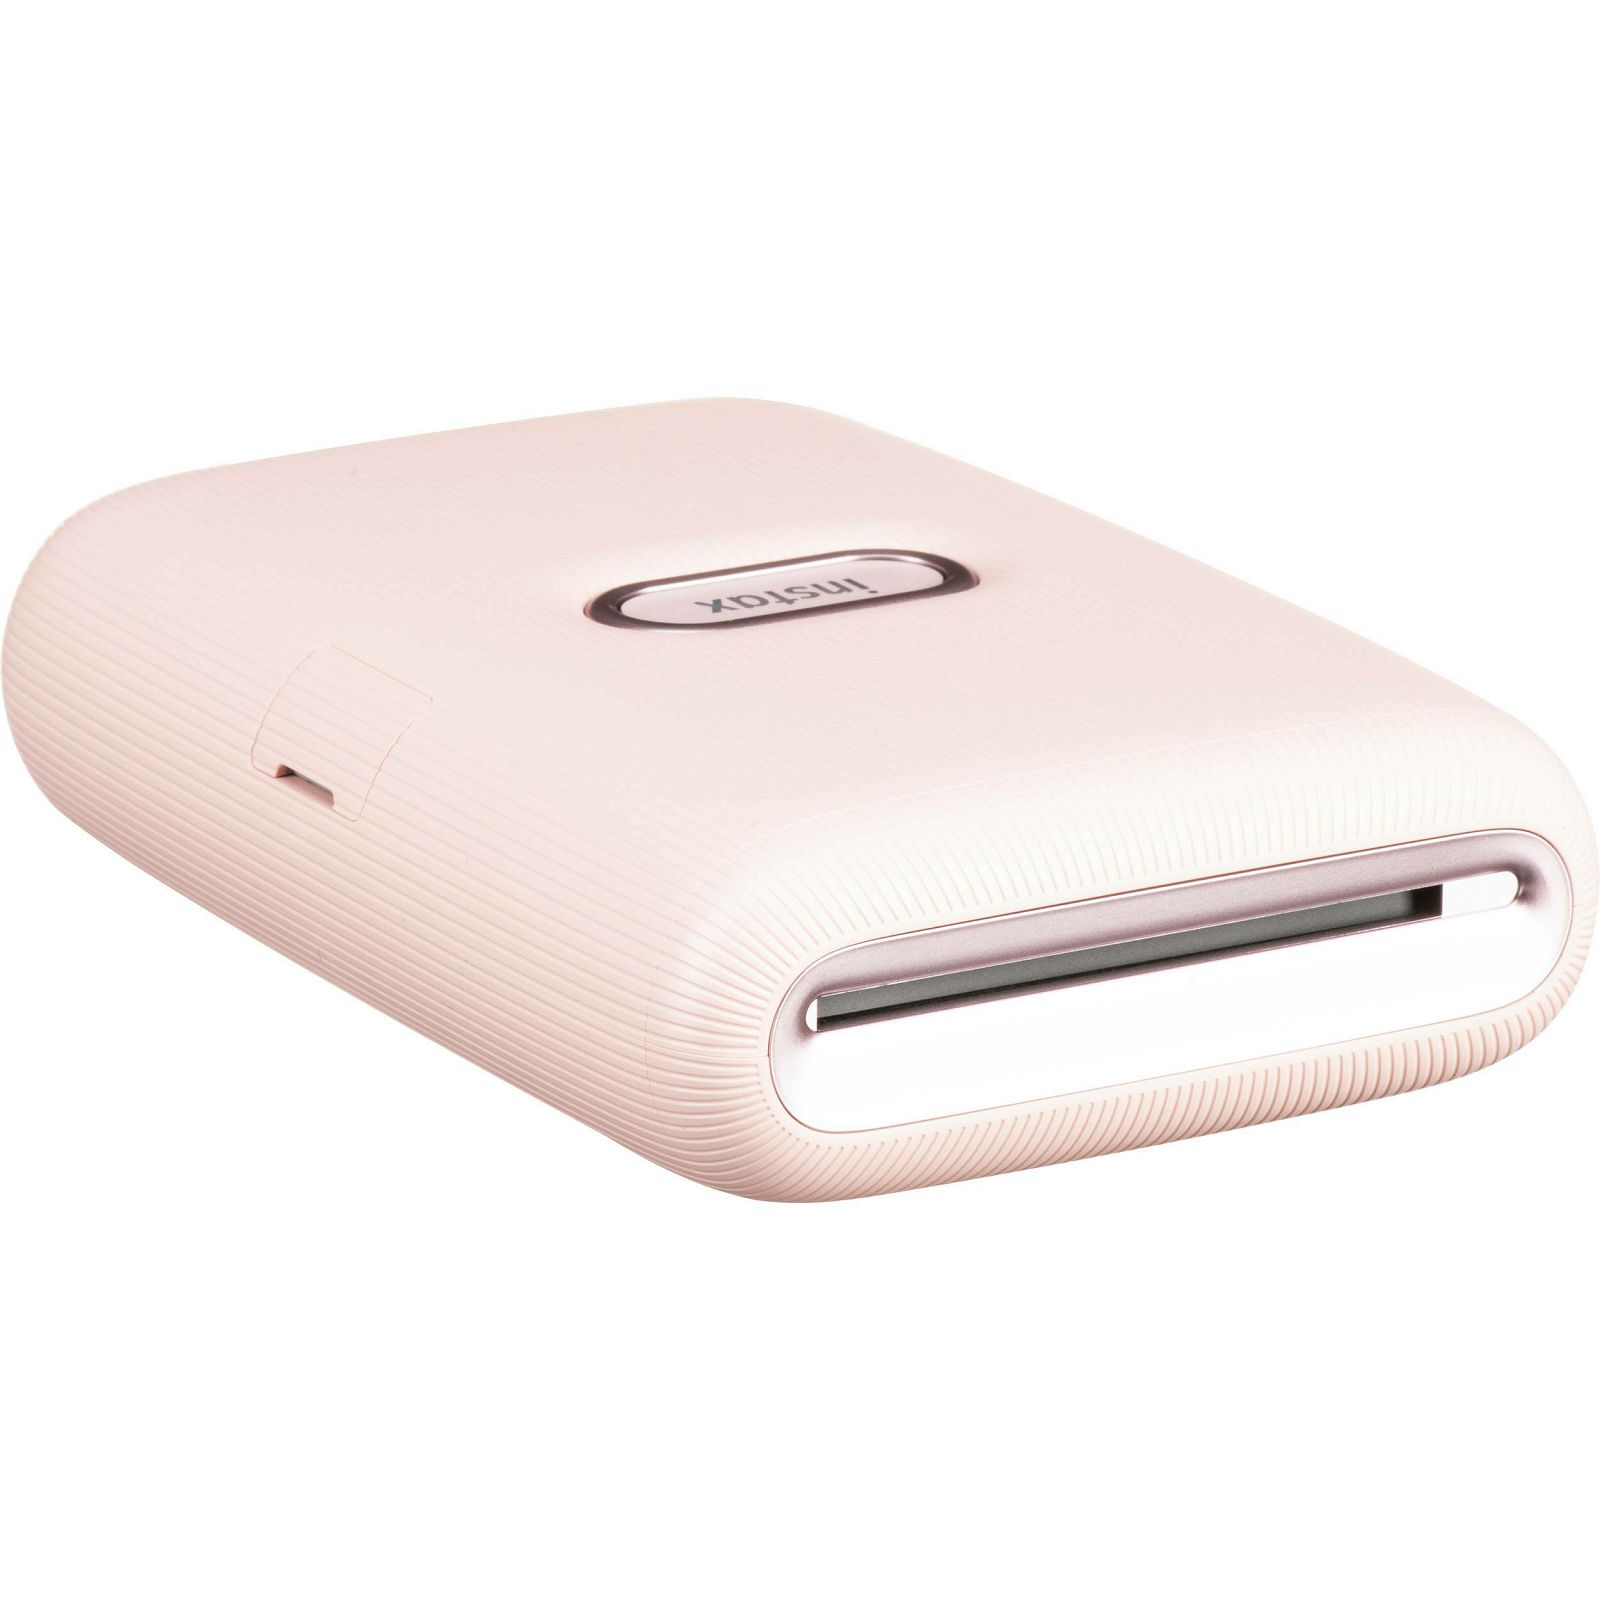 Fujifilm Instax Mini Link EX D Dusky Pink Smartphone Instant printer polaroid